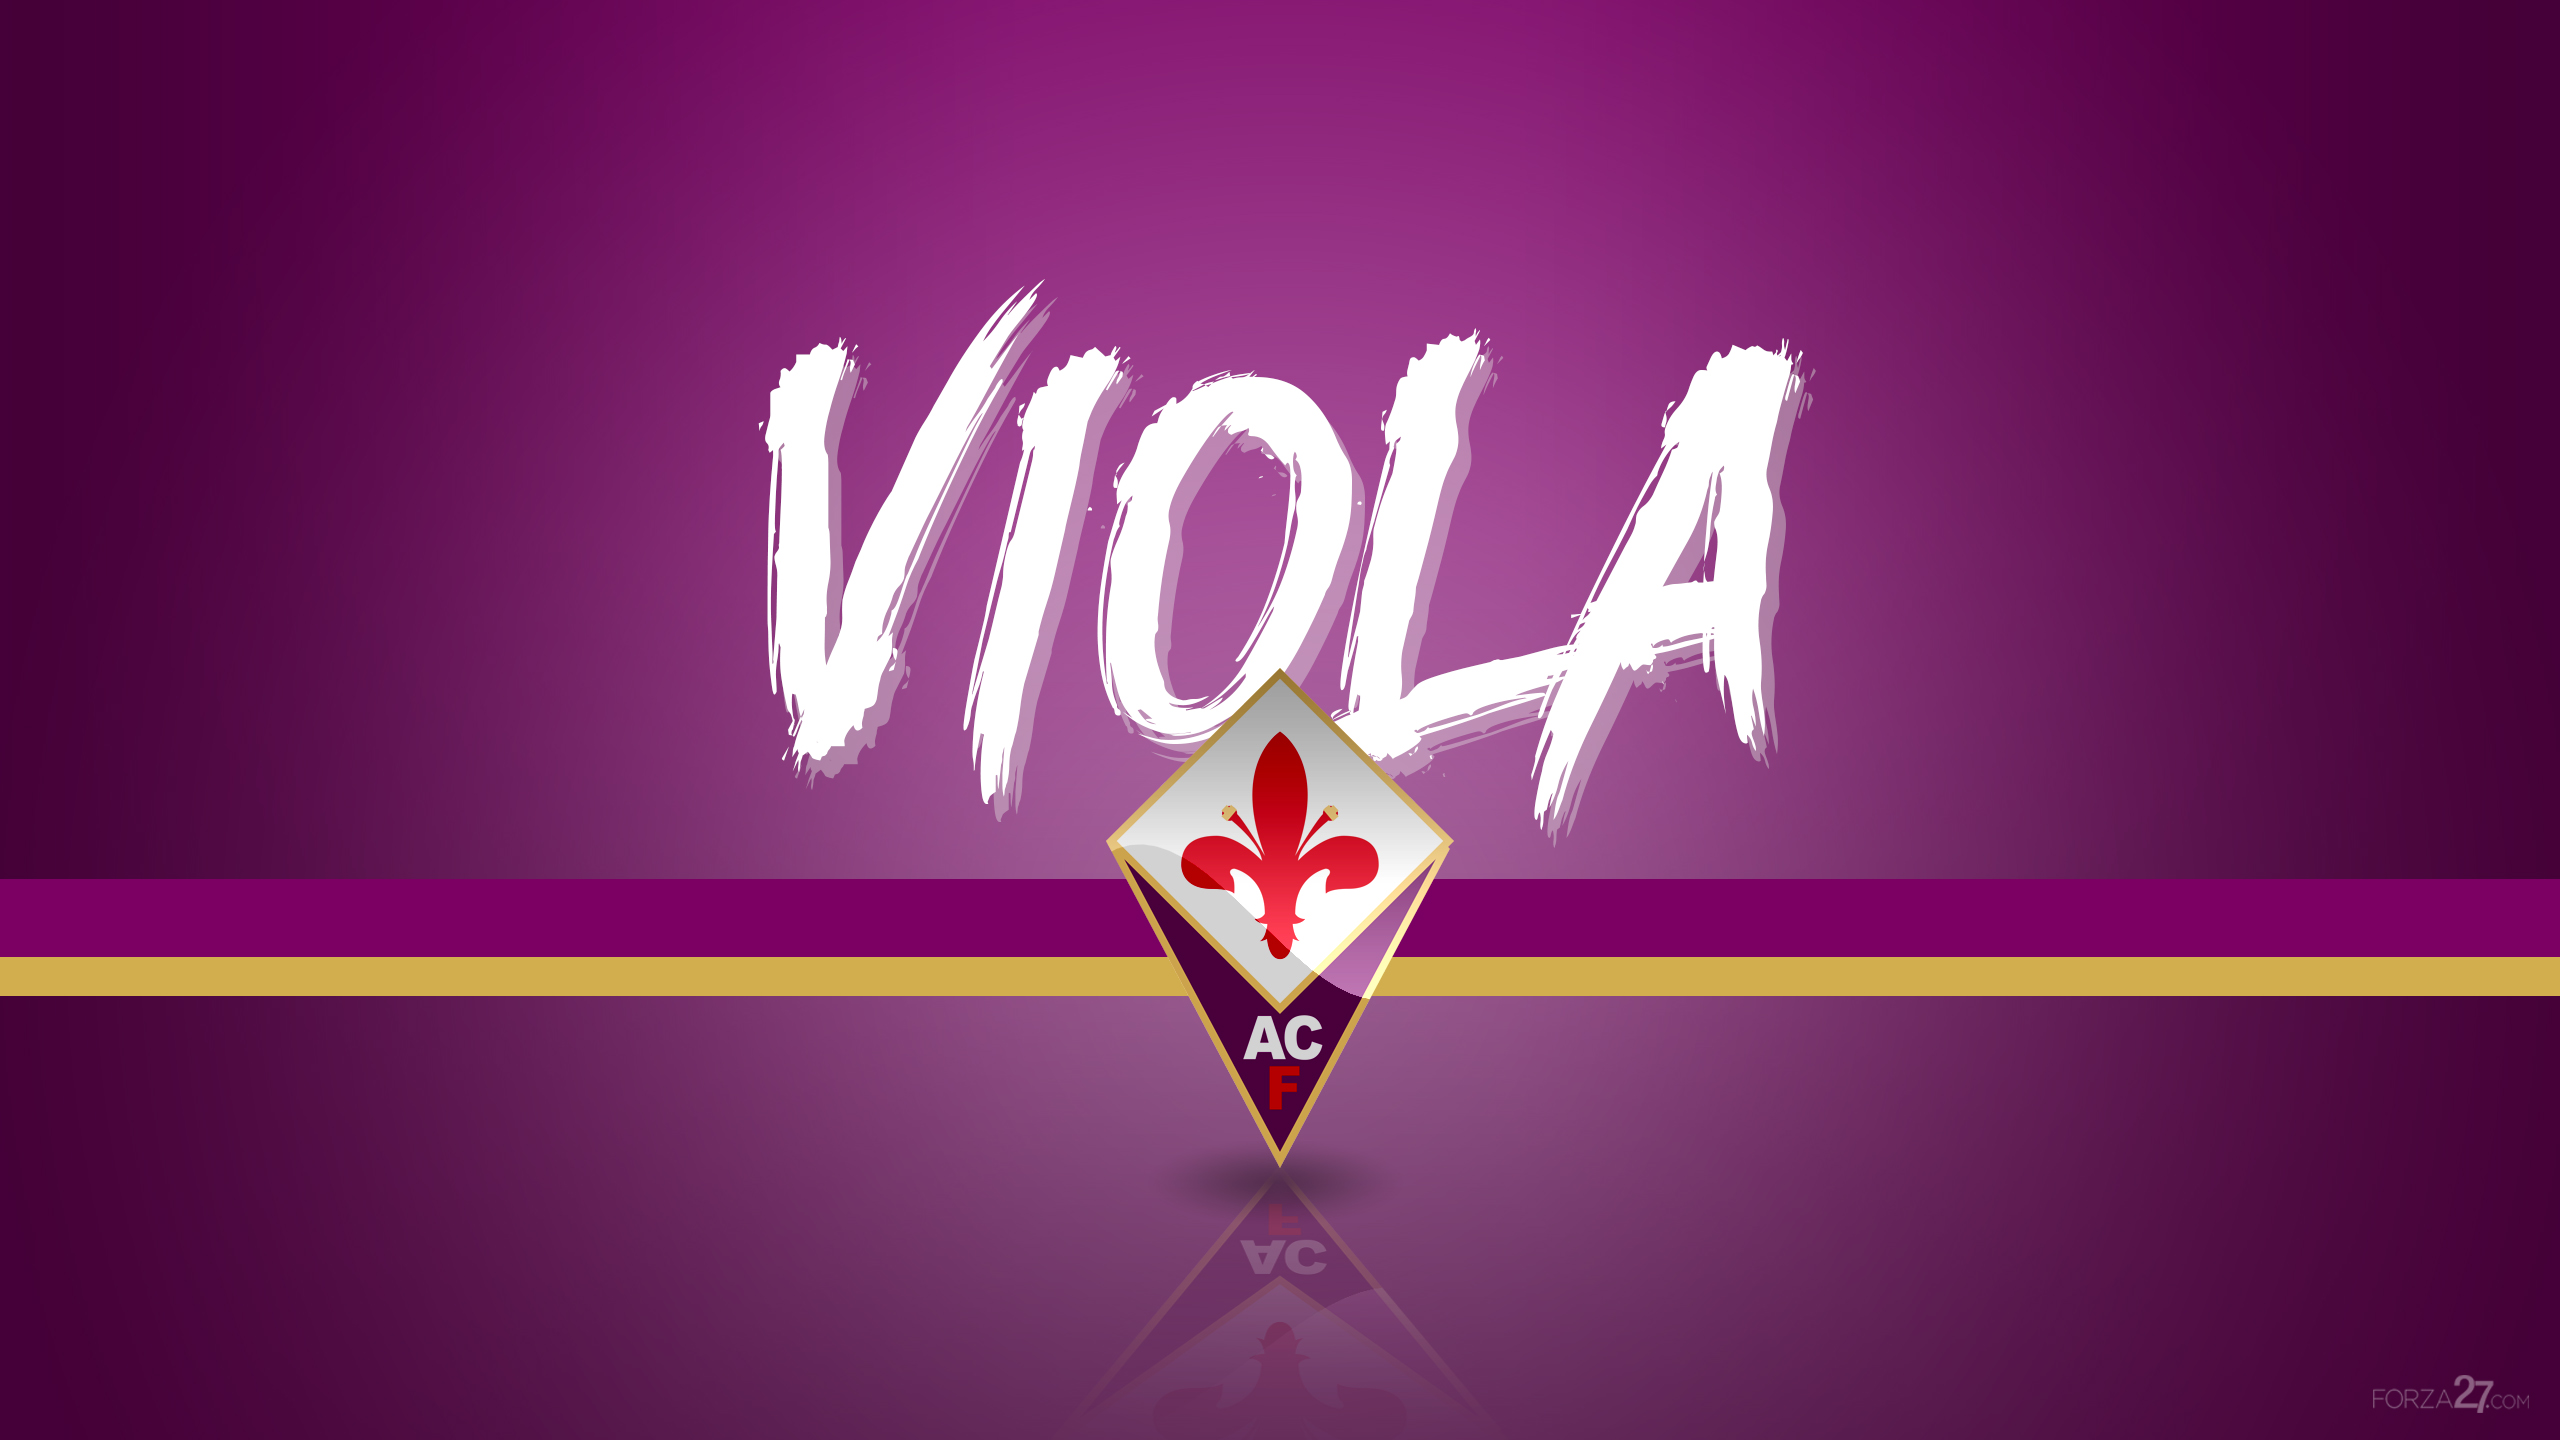 Acf Fiorentina Vector Art & Graphics